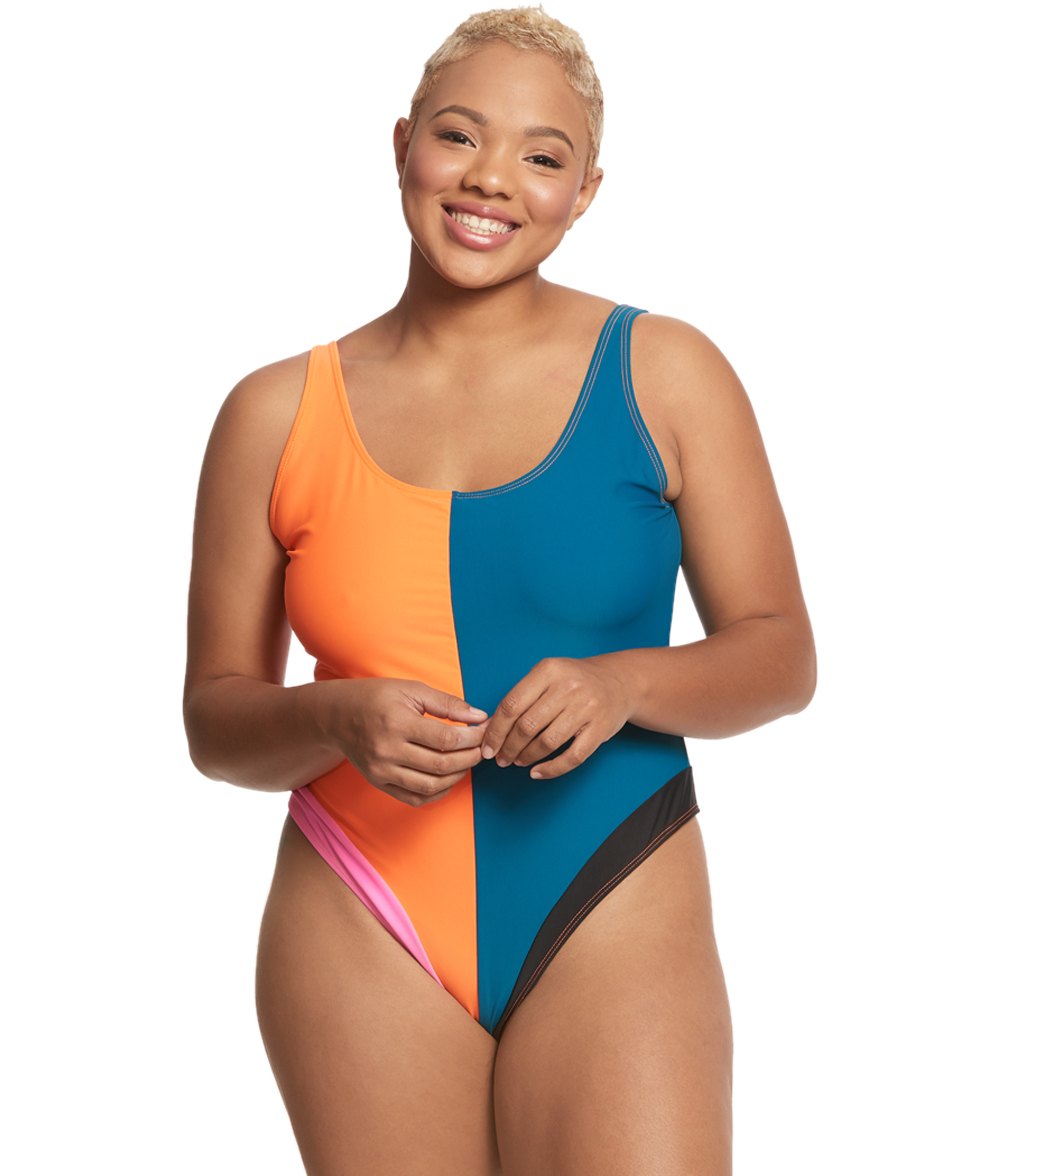 Cynthia Rowley Plus Size Heather One Piece Swimsuit - Orange/Teal 1X - Swimoutlet.com